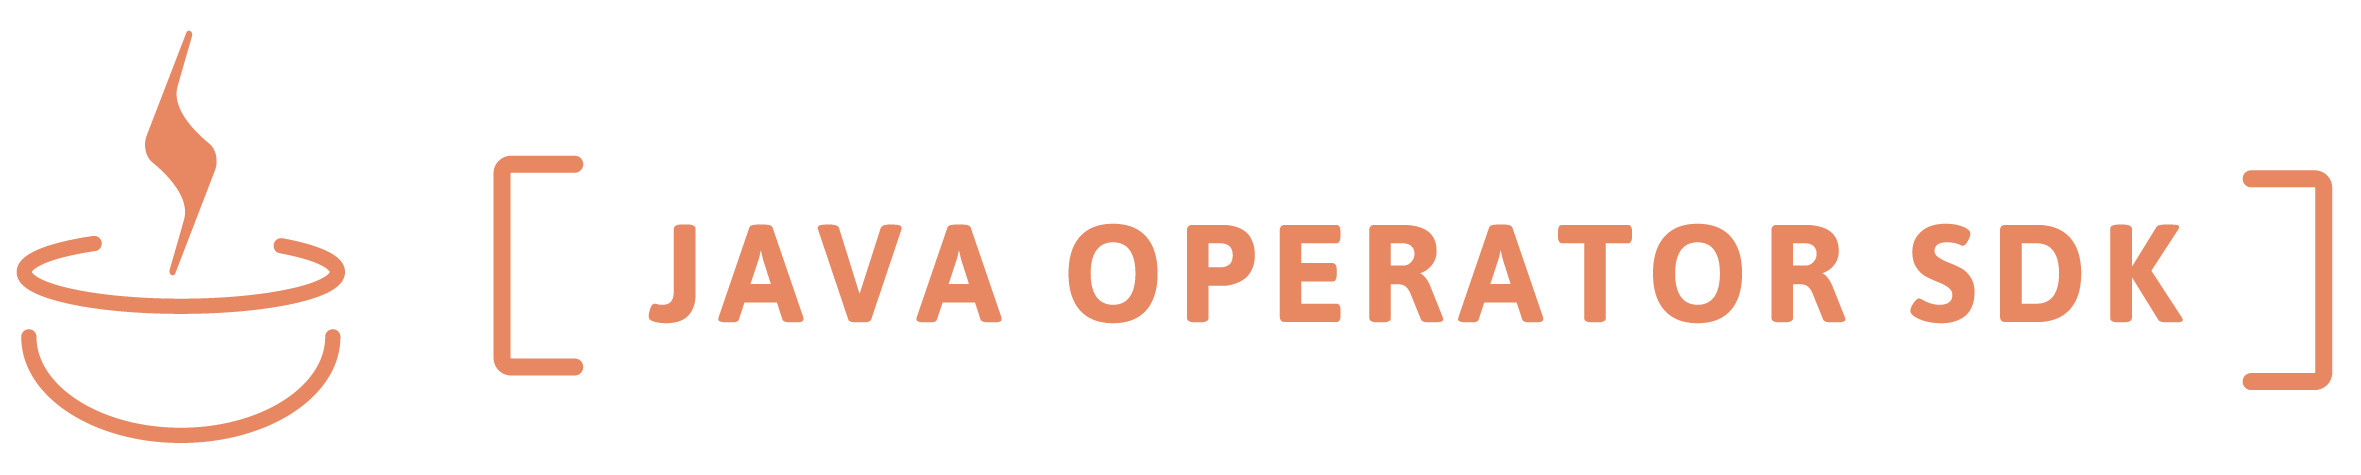 java-operator-sdk